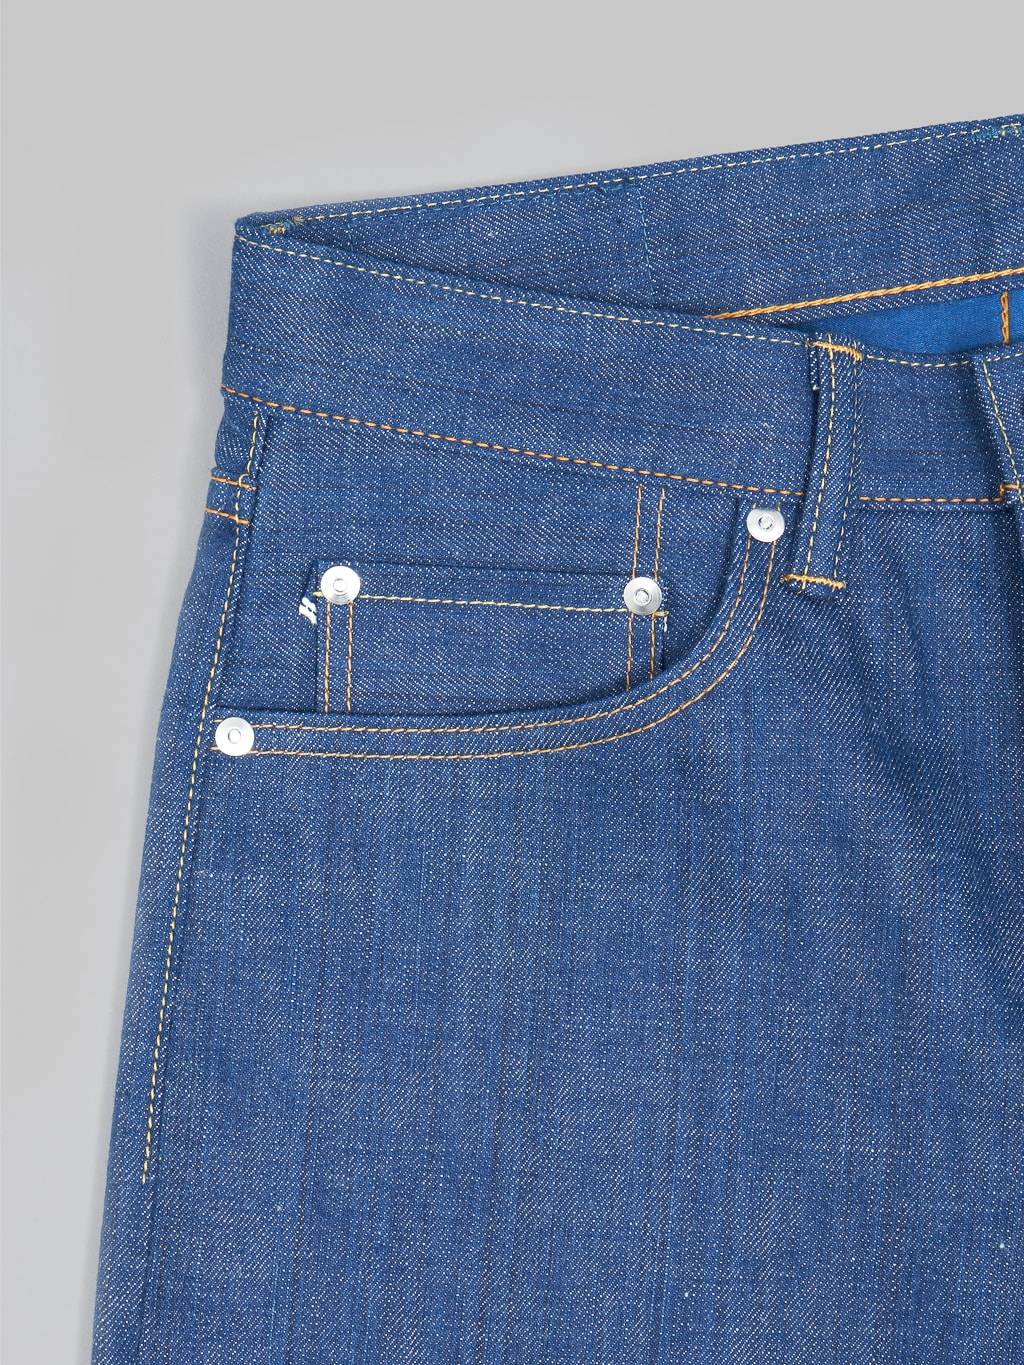 momotaro 0605 ai natural indigo dyed natural tapered denim jeans coin pocket